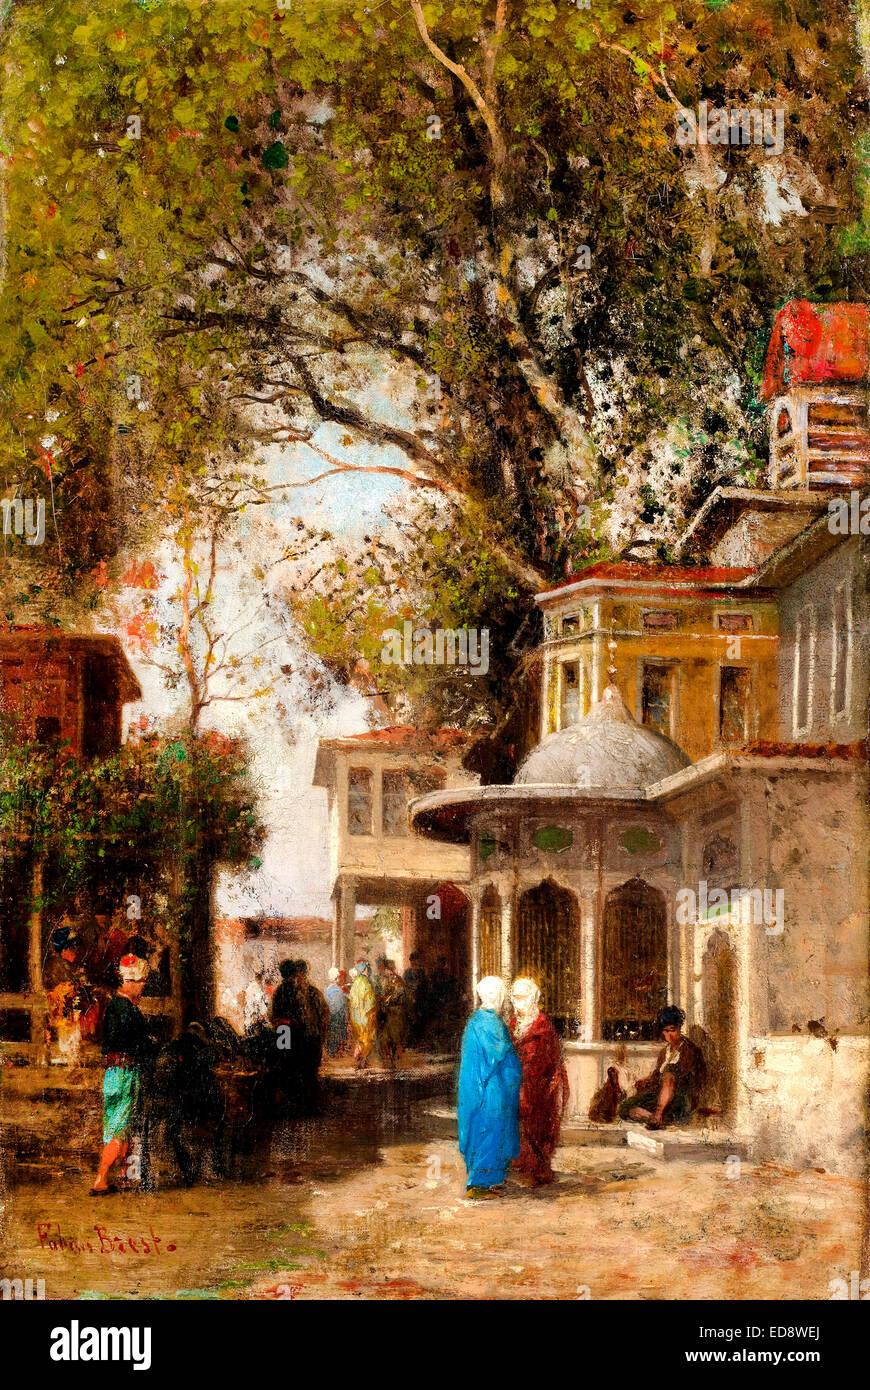 Germain Fabius Brest, The Street. 19th Century. Oil on canvas. Pera Museum, Istanbul, Turkey. Stock Photo